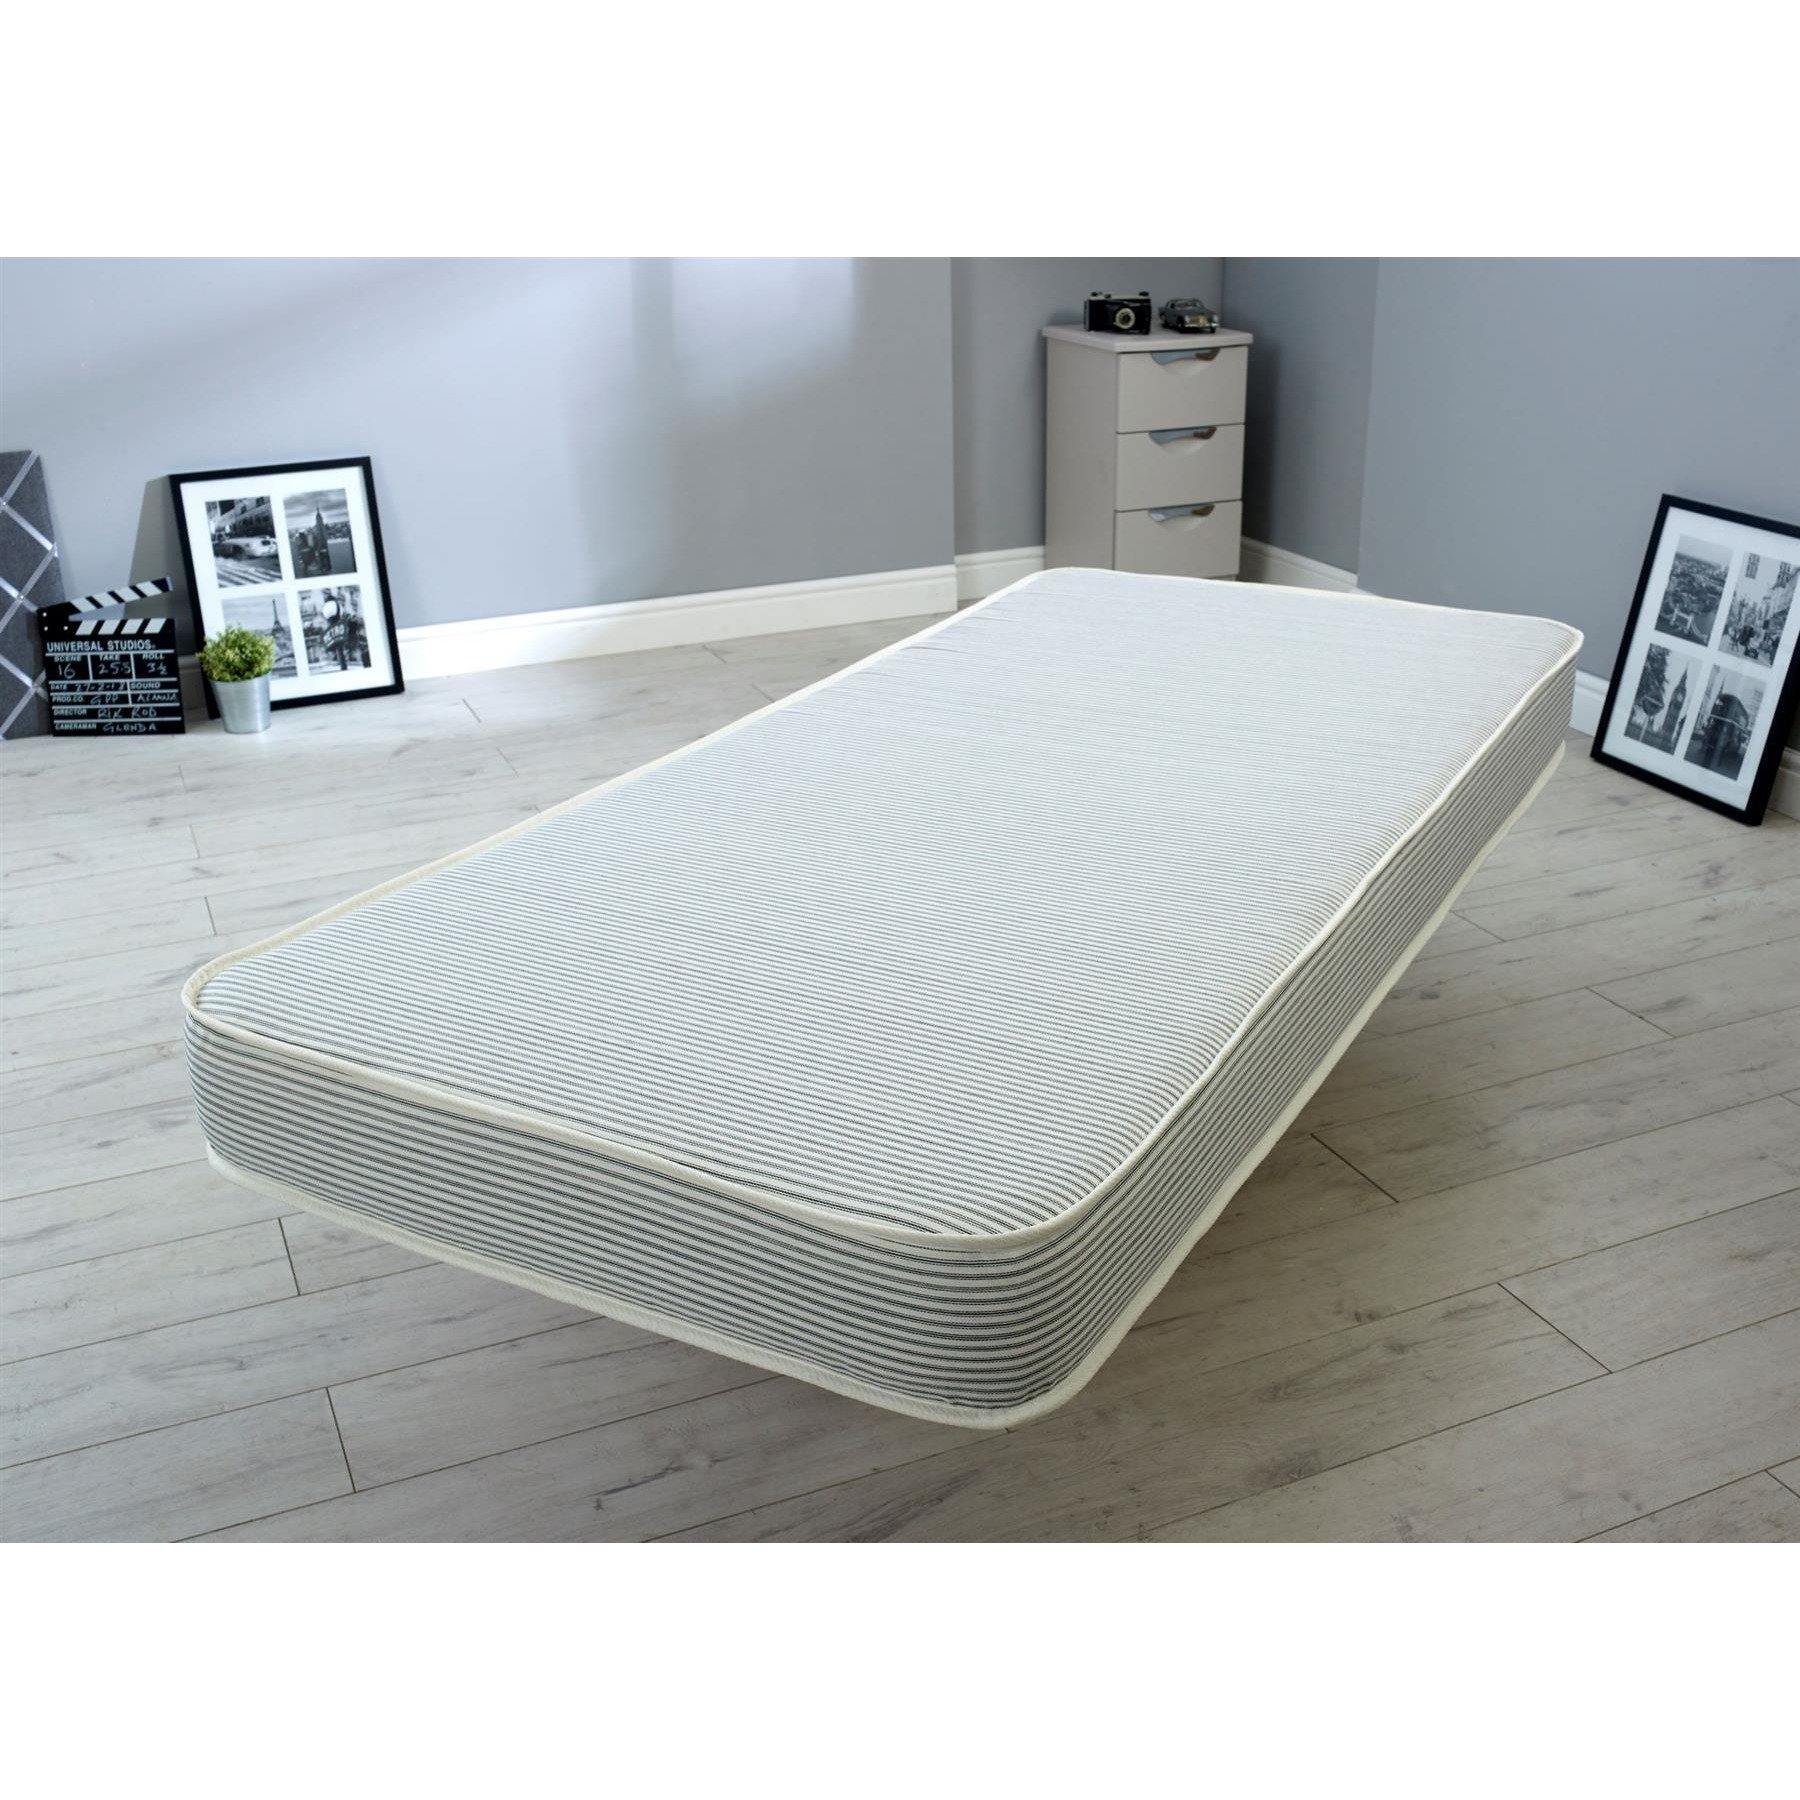 Starlight Beds Atlas Stamford Stripe Dual Sided 4" Inch All Foam No Springs, Reflex Foam Mattress - Starlight Beds™